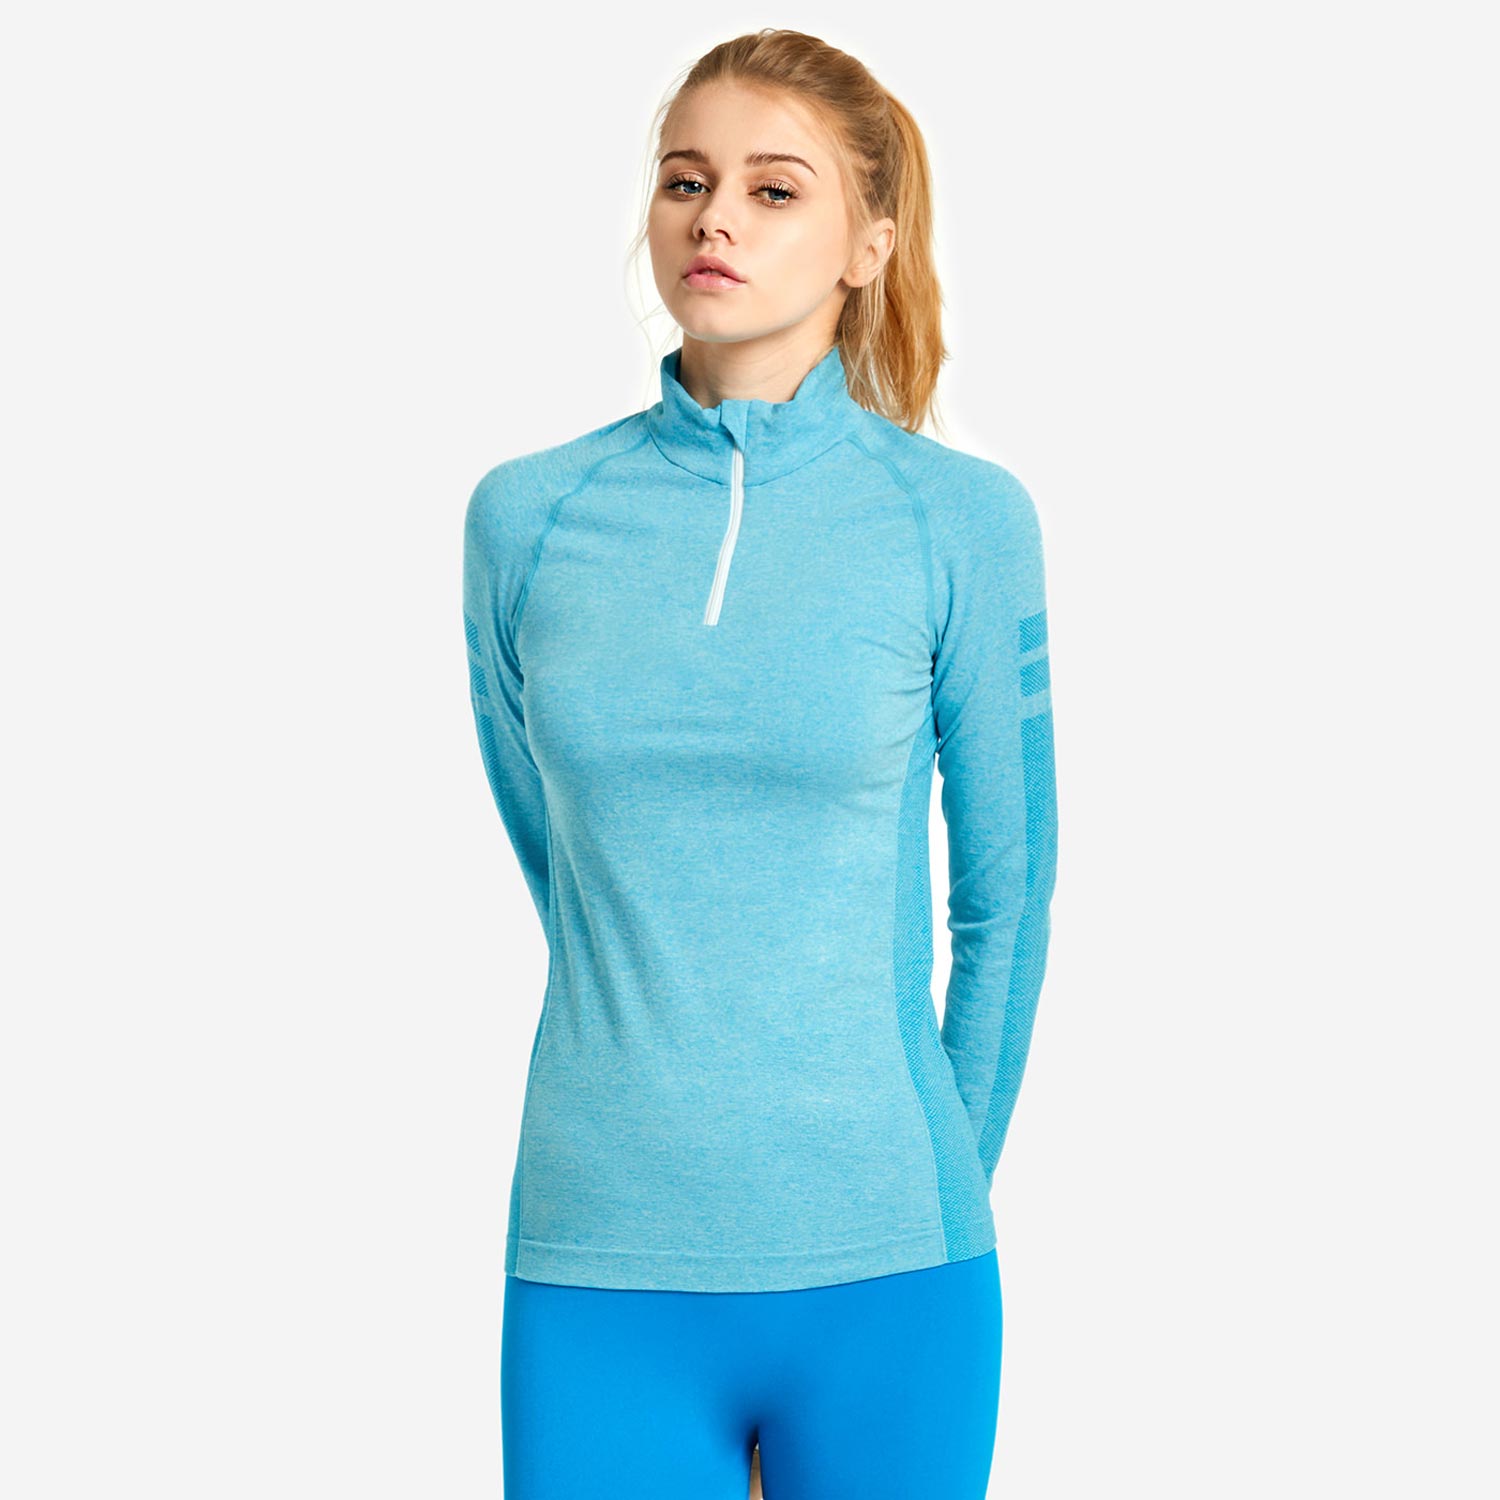 Buy One Get One Free Ladies 1/4 Zip Active Pullover Heather